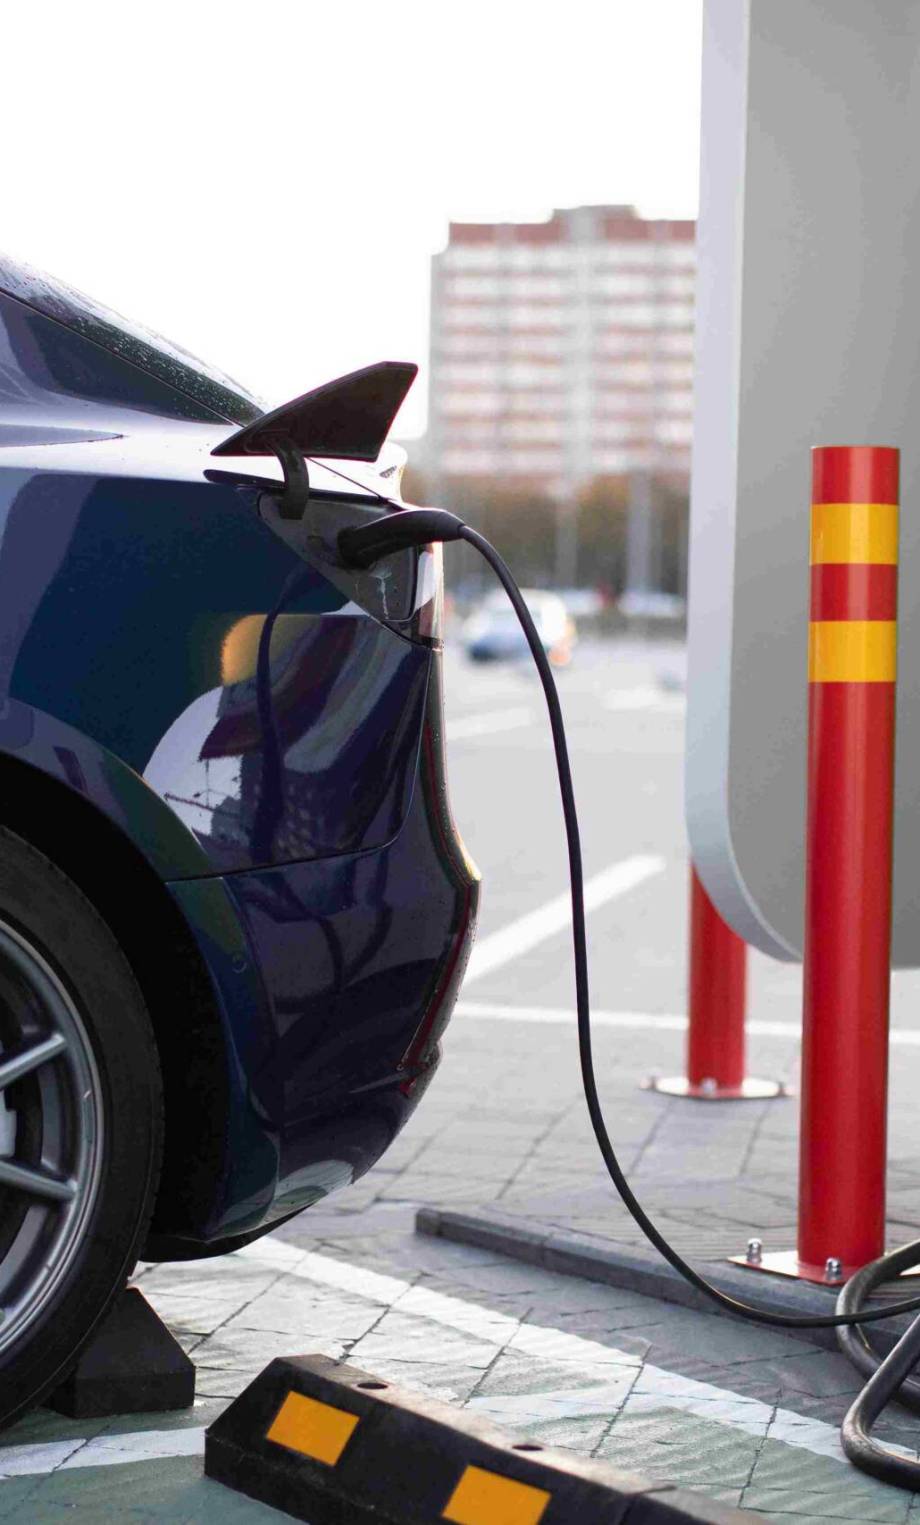 charging-of-modern-energy-vehicle-on-the-street-st-2021-12-09-06-02-03-utc_11zon